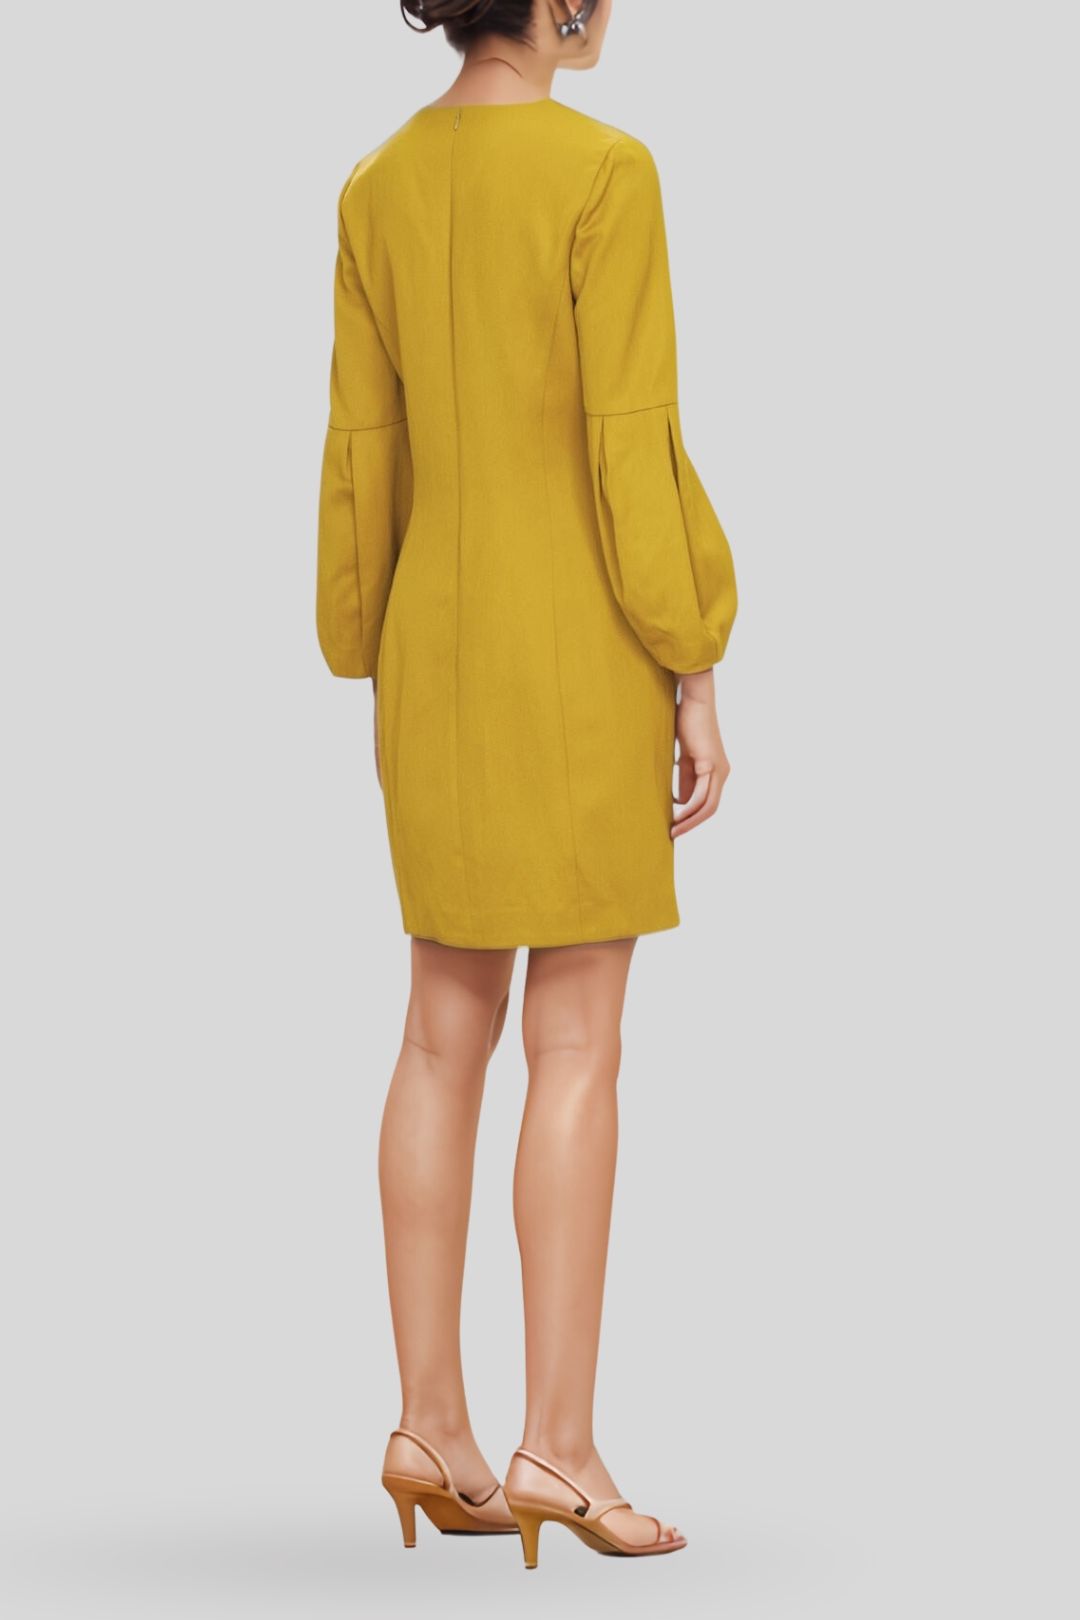 Veronika Maine Satin Twill Fluted Sleeve Dress in Yellow